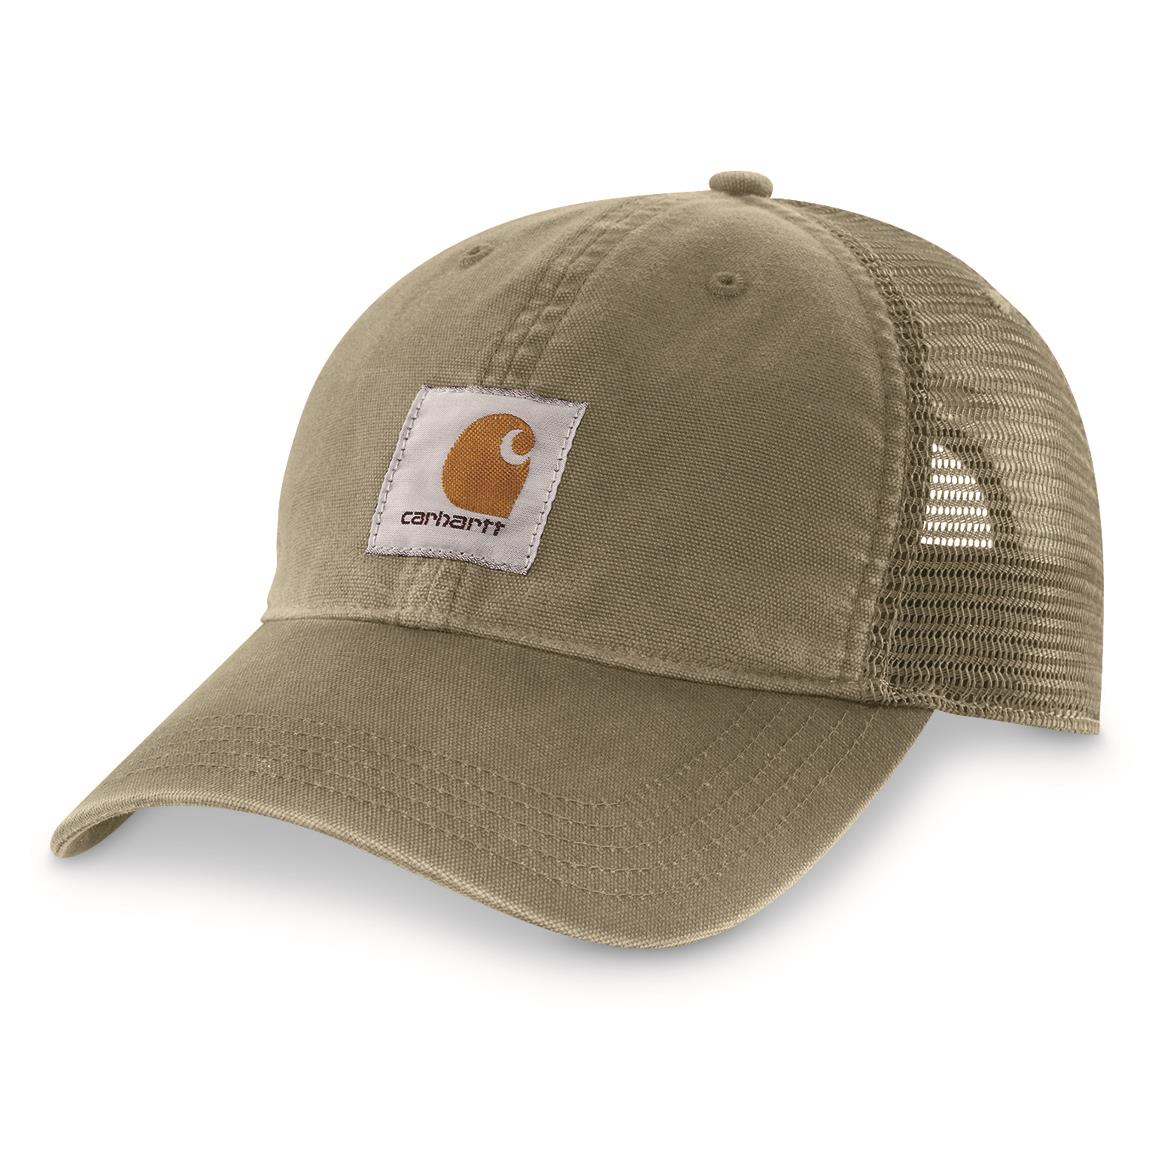 Carhartt Buffalo Cap - 657480, Hats & Caps at Sportsman's Guide